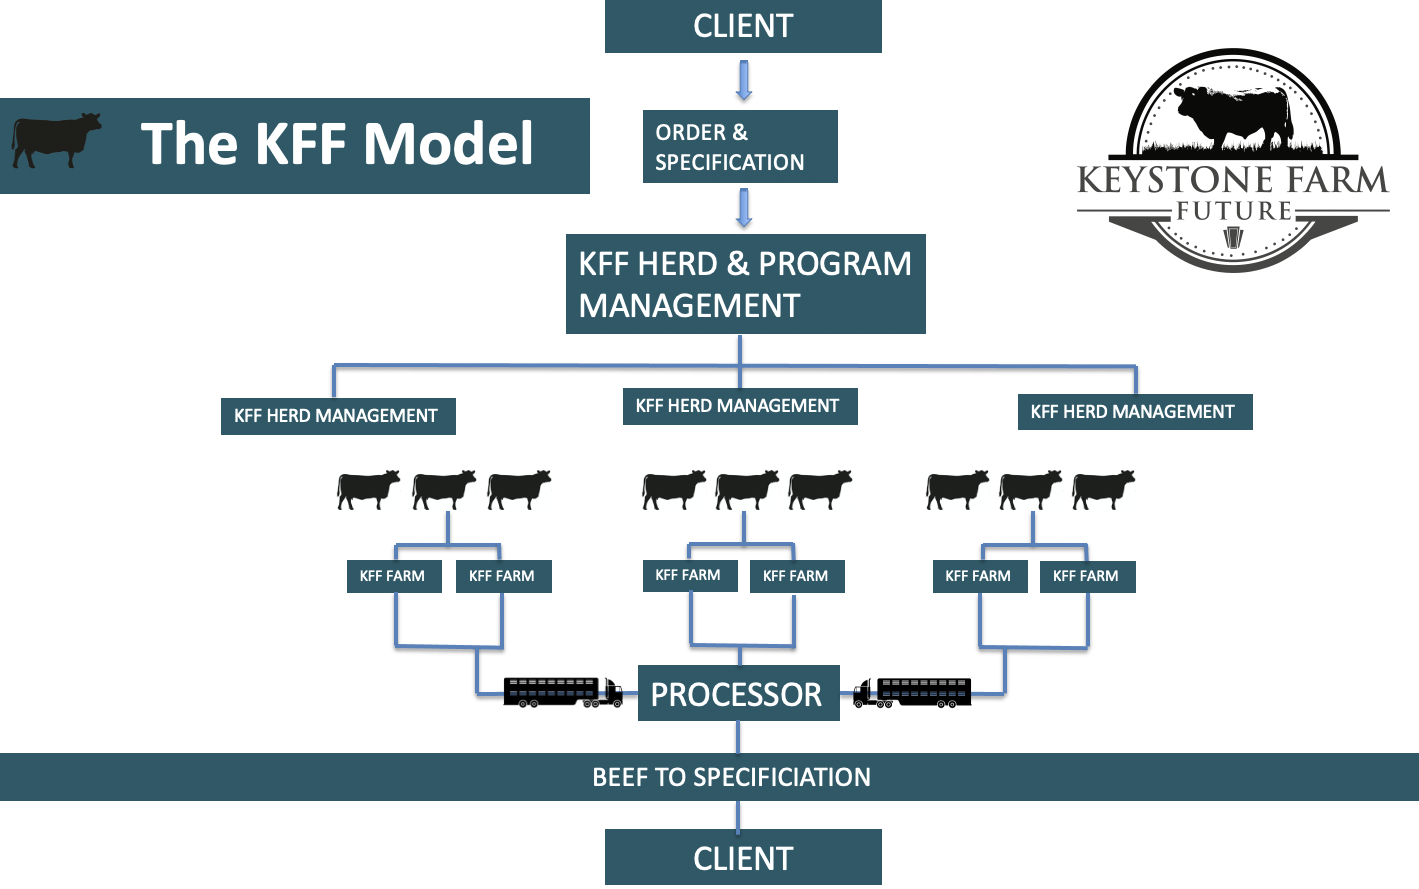 The KFF Model Flowchart